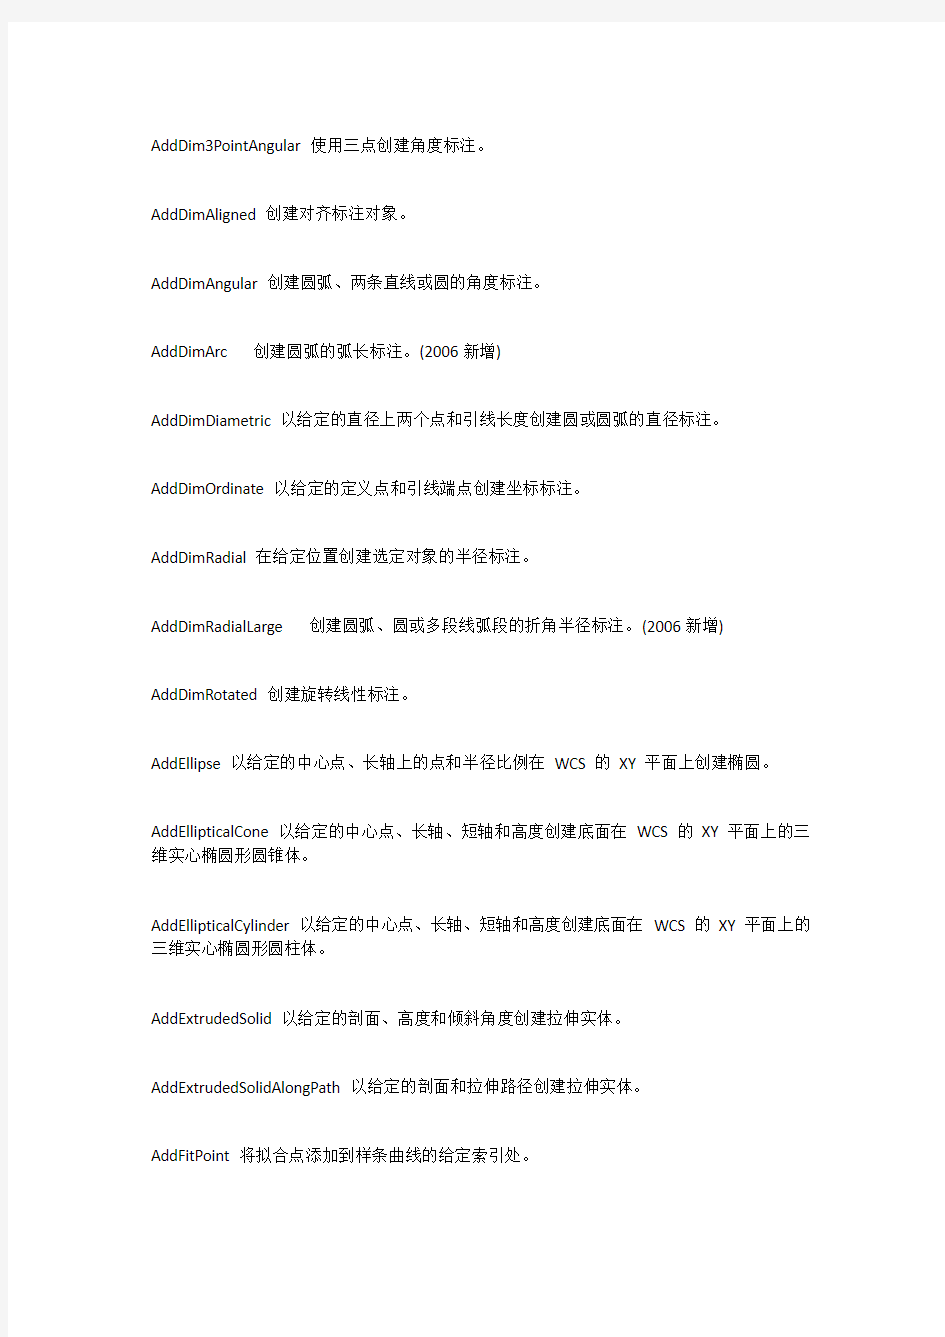 CAD_VBA_二次开发中的所有方法的中文翻译